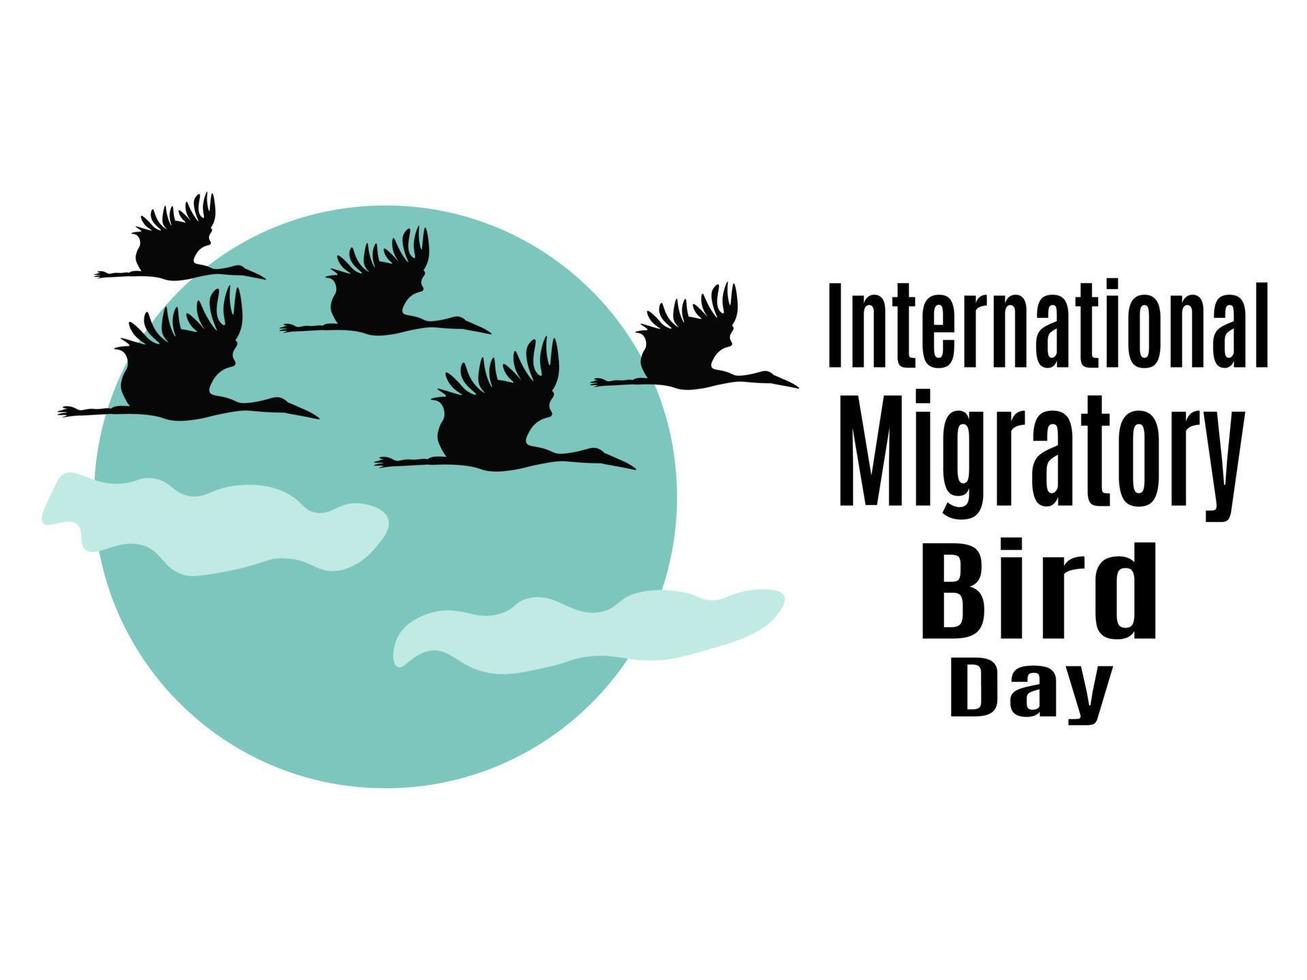 día internacional de las aves migratorias, idea para afiches, pancartas, volantes o postales vector